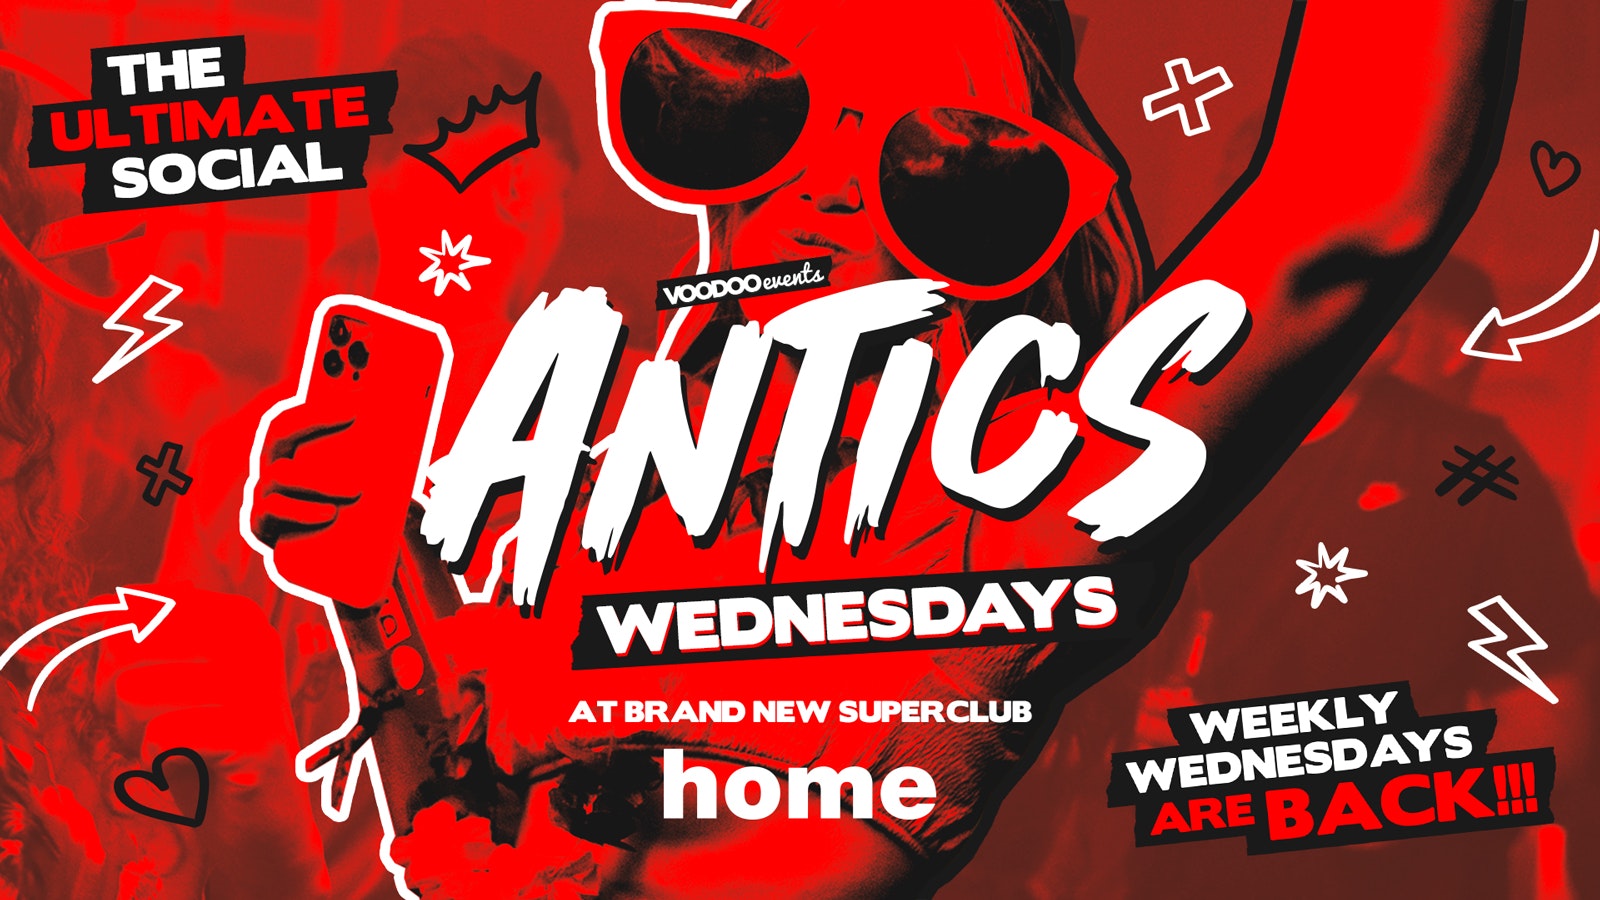 Antics @ THE BRAND NEW SUPER CLUB HOME – Wednesday 19th June